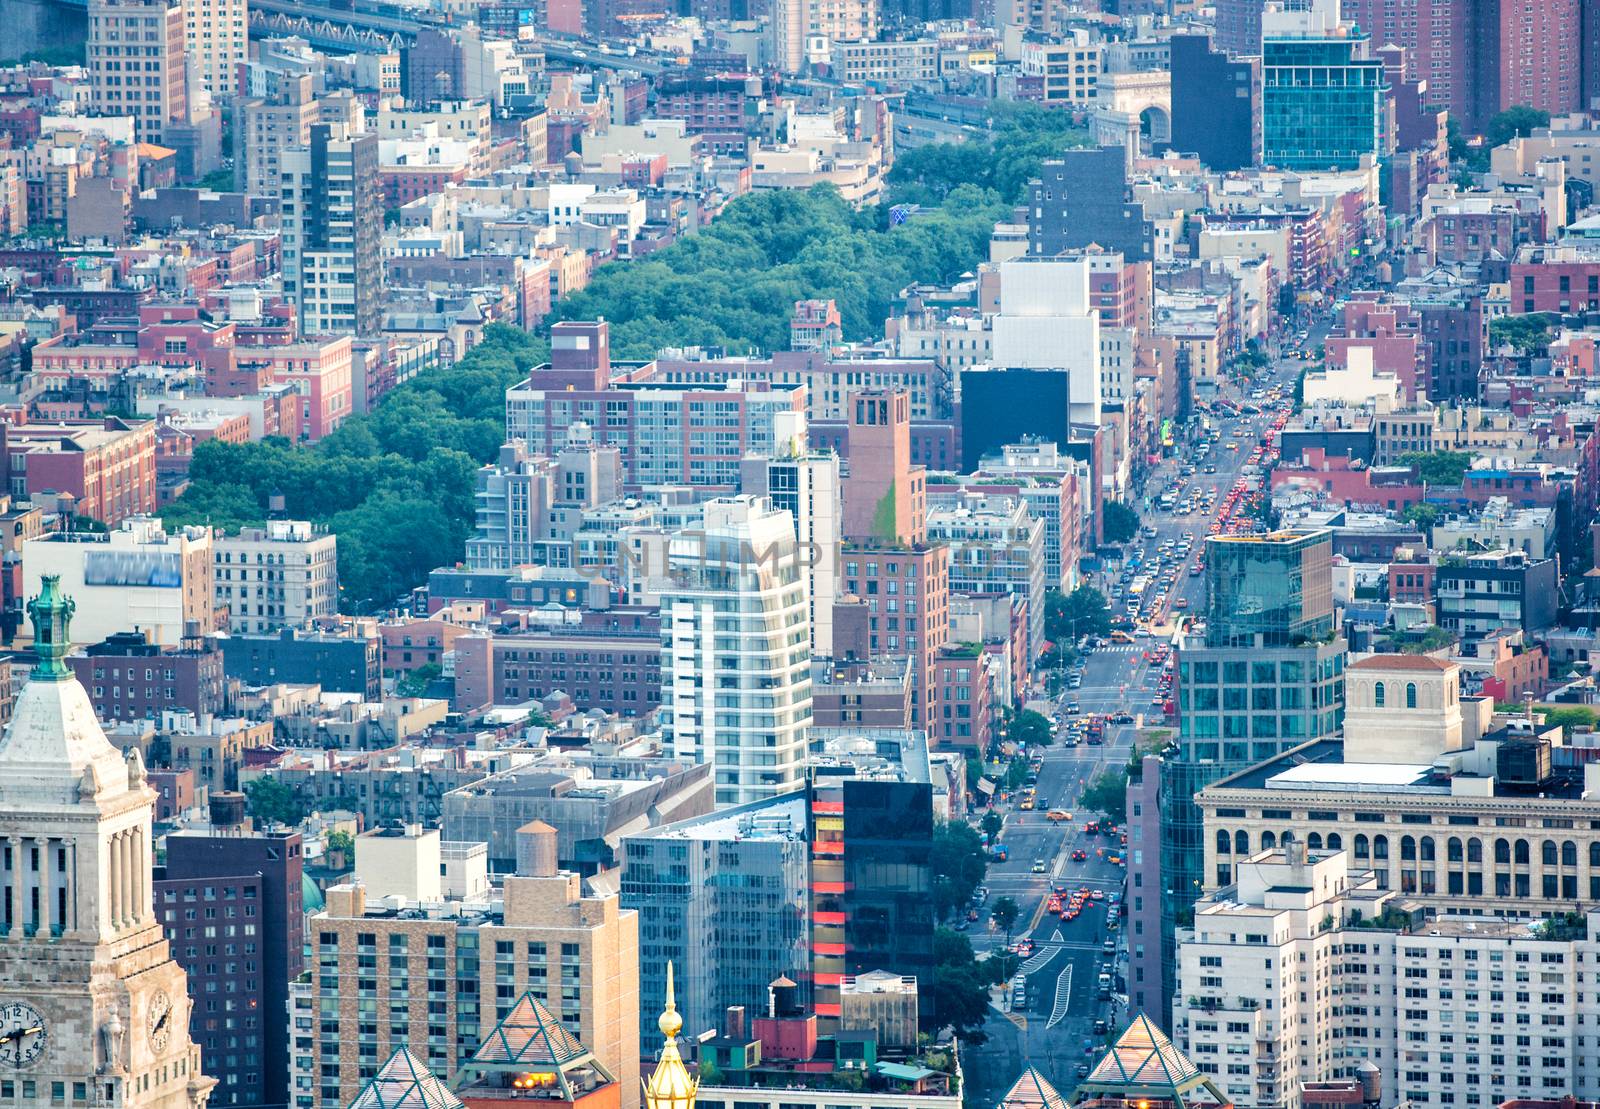 Aerial view of Midtown Manhattan - New York City.